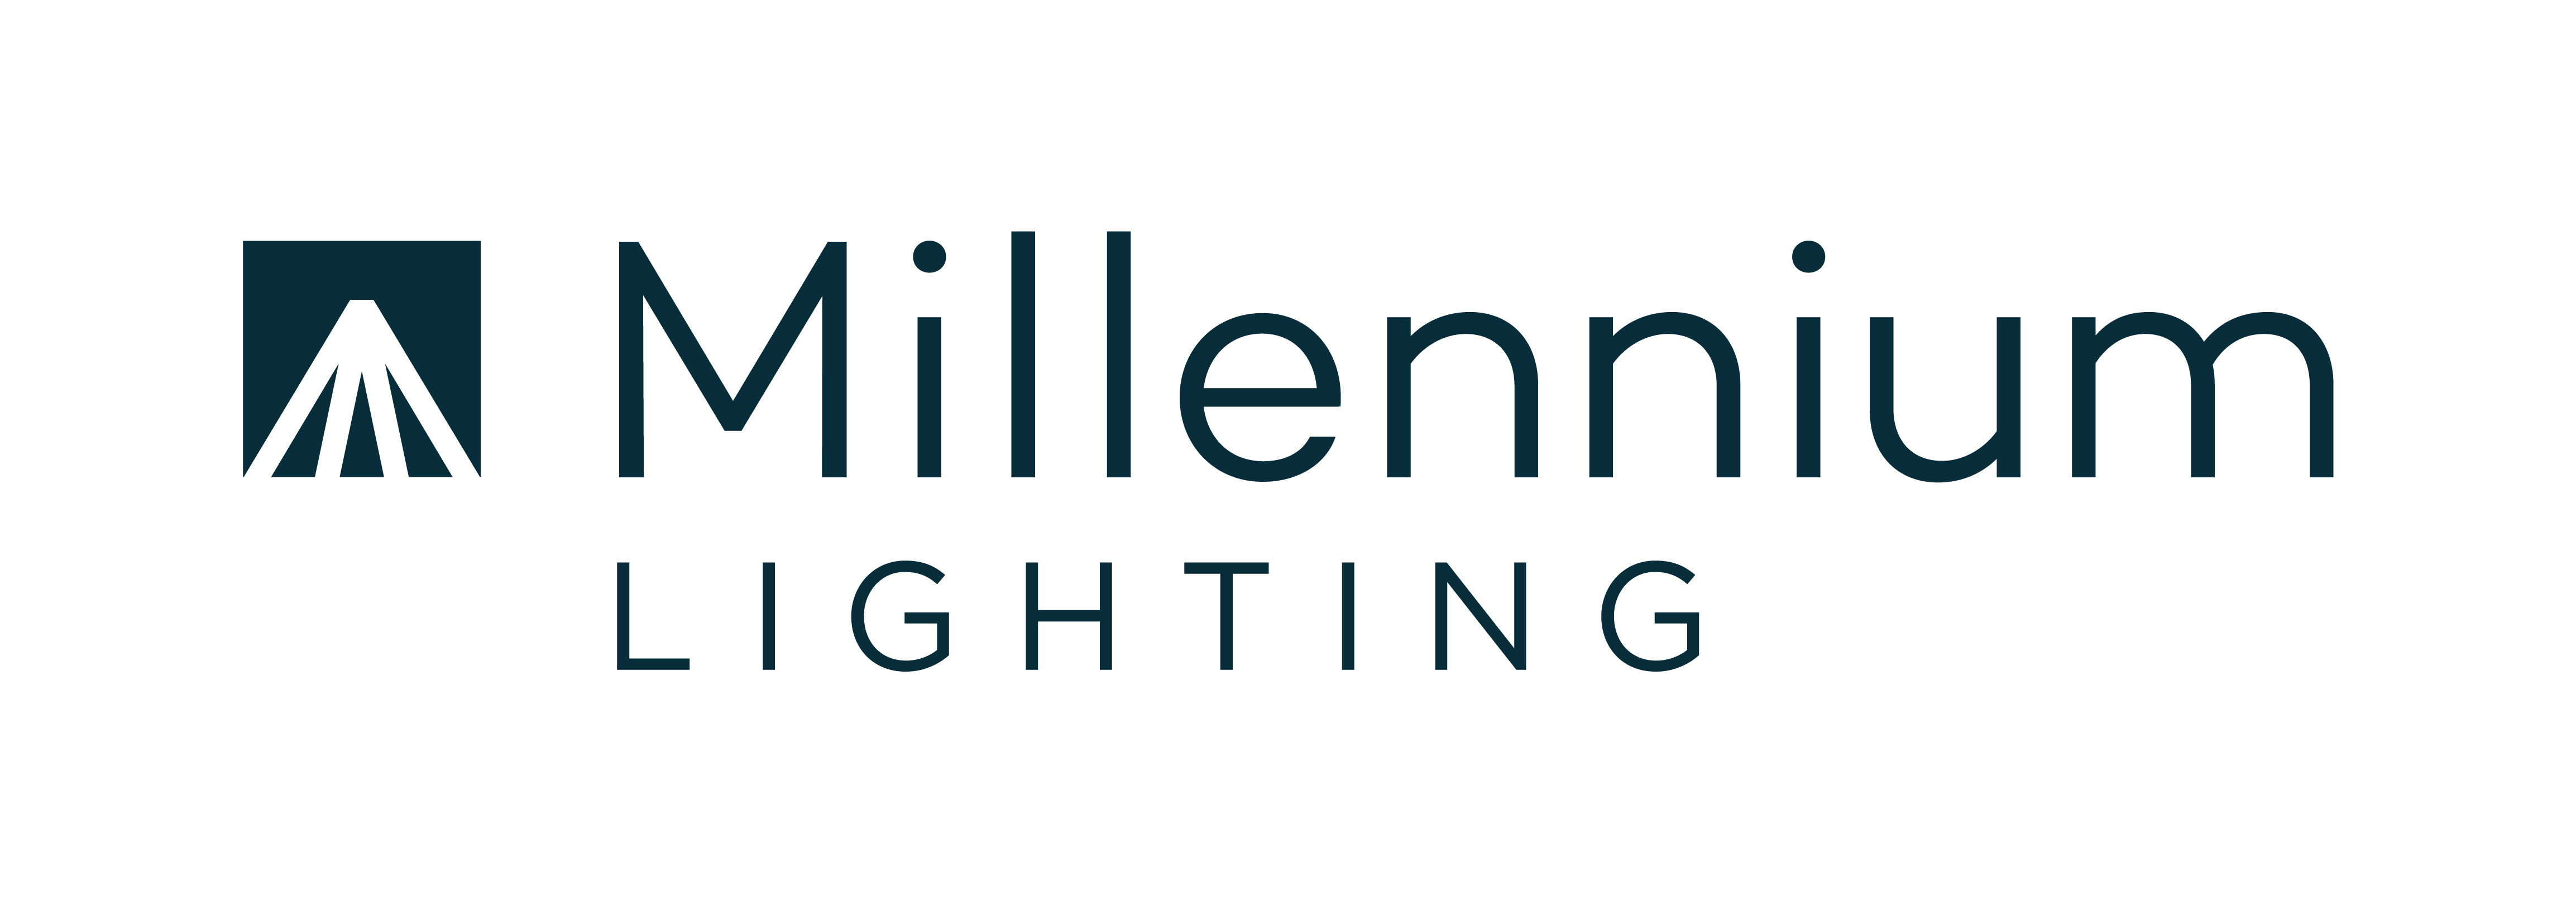 Millennium Lighting logo